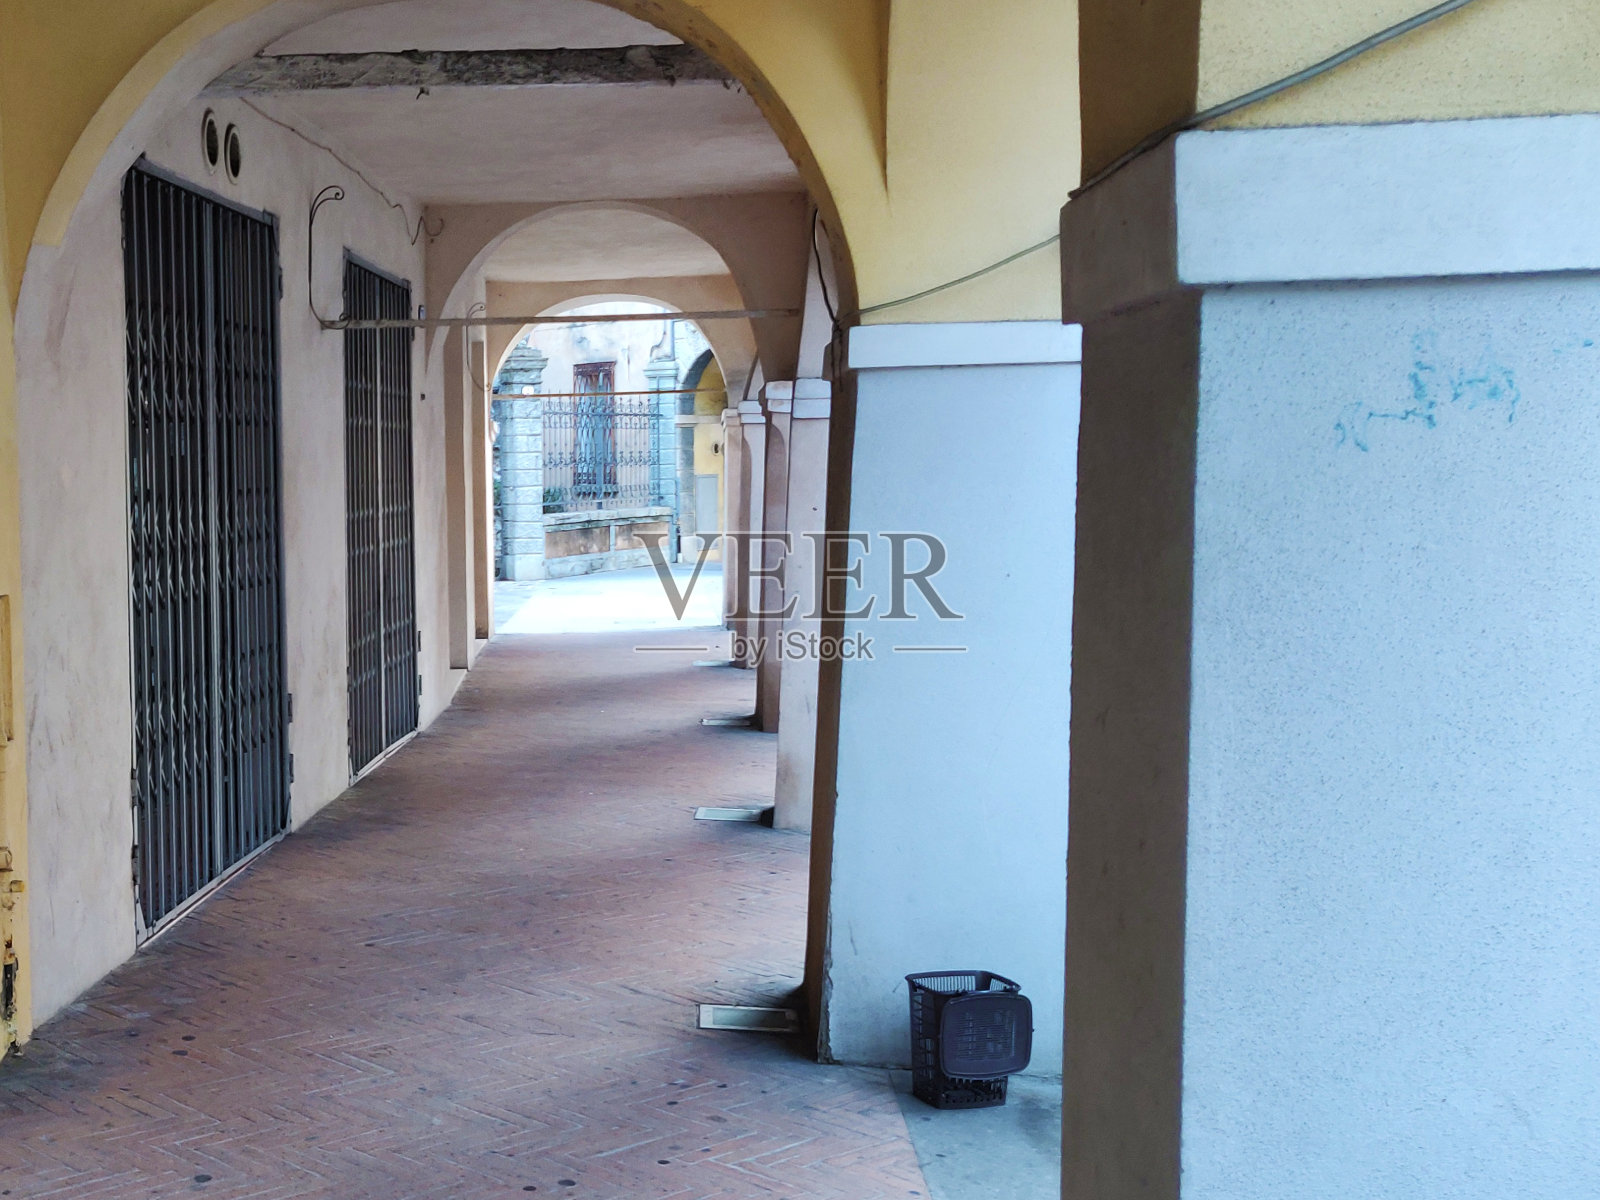 Bagnacavallo市中心部分拱廊的景色照片摄影图片